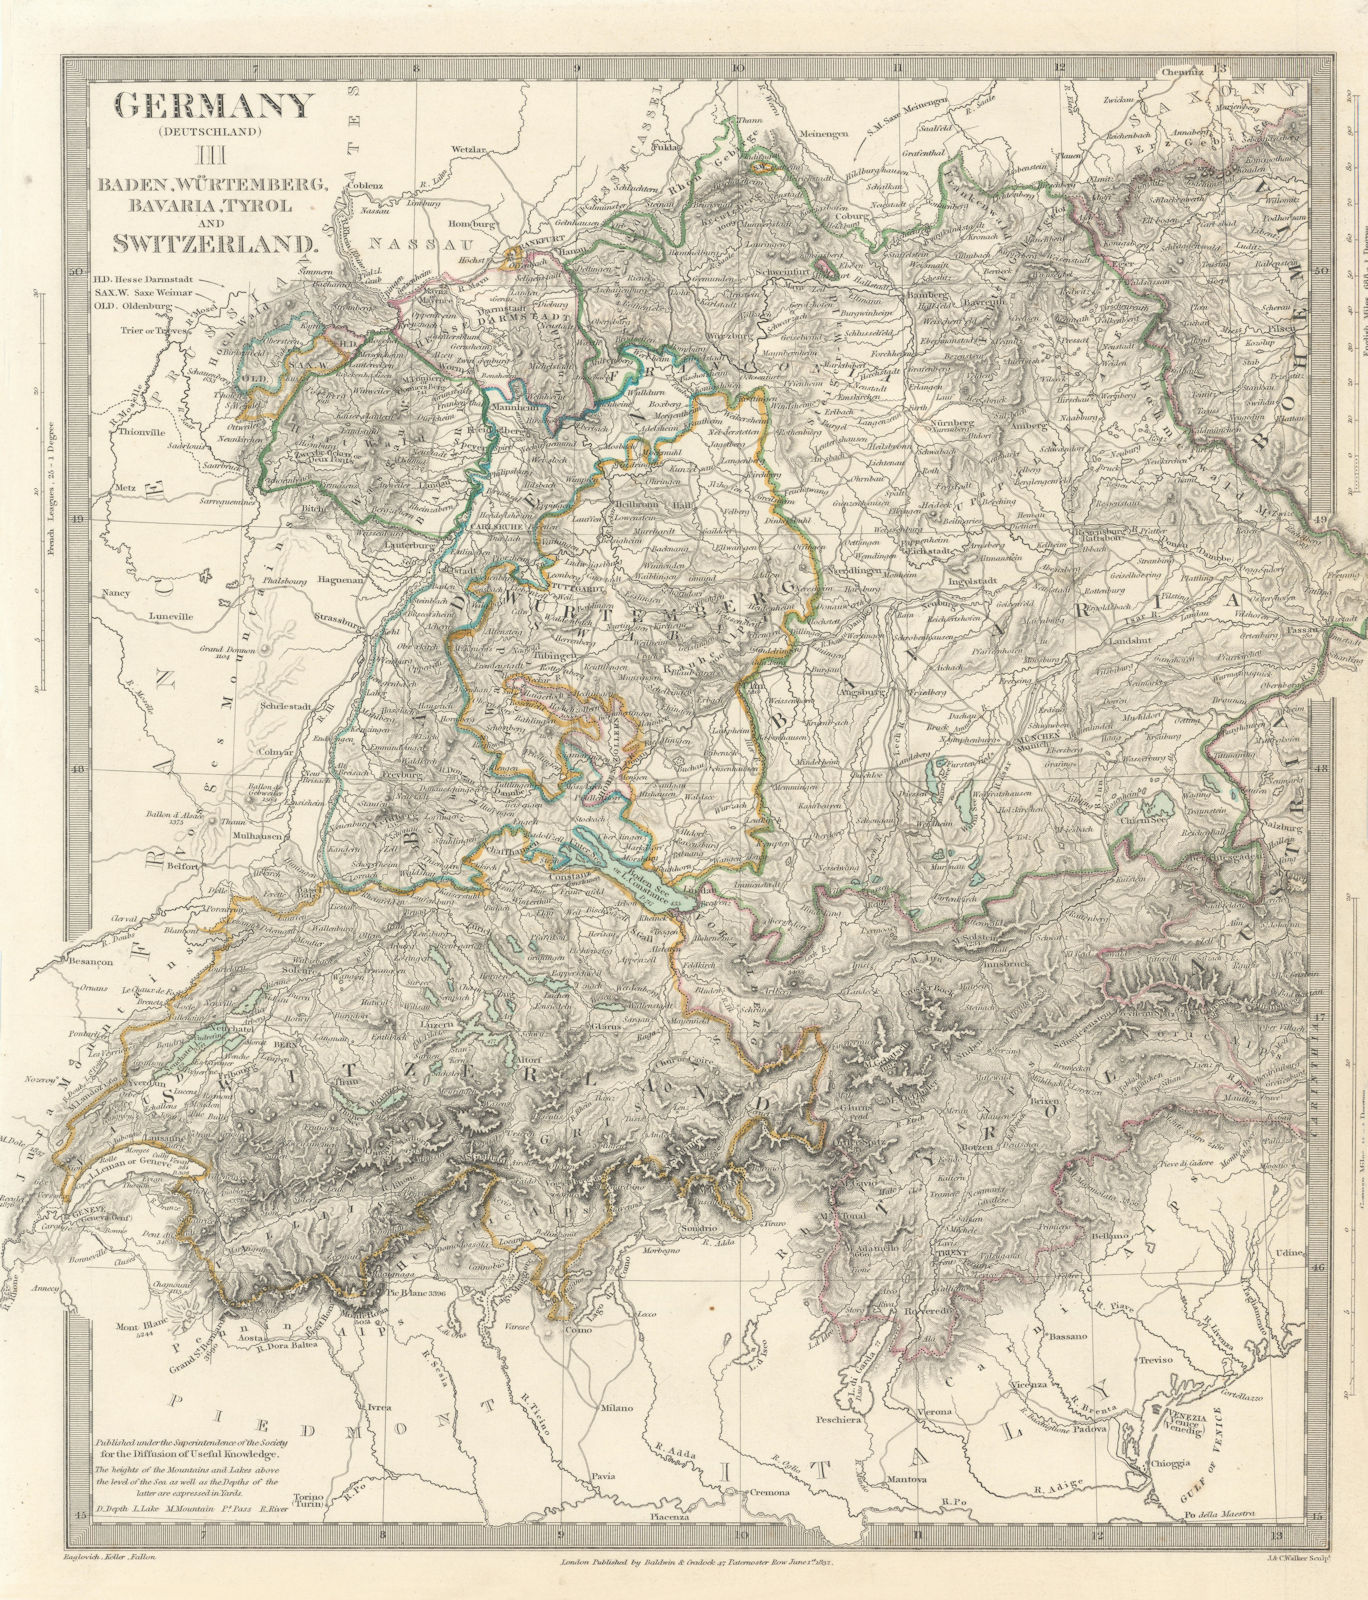 GERMANY SWITZERLAND AUSTRIA. Baden, Württemberg, Bavaria, Tyrol. SDUK 1844 map